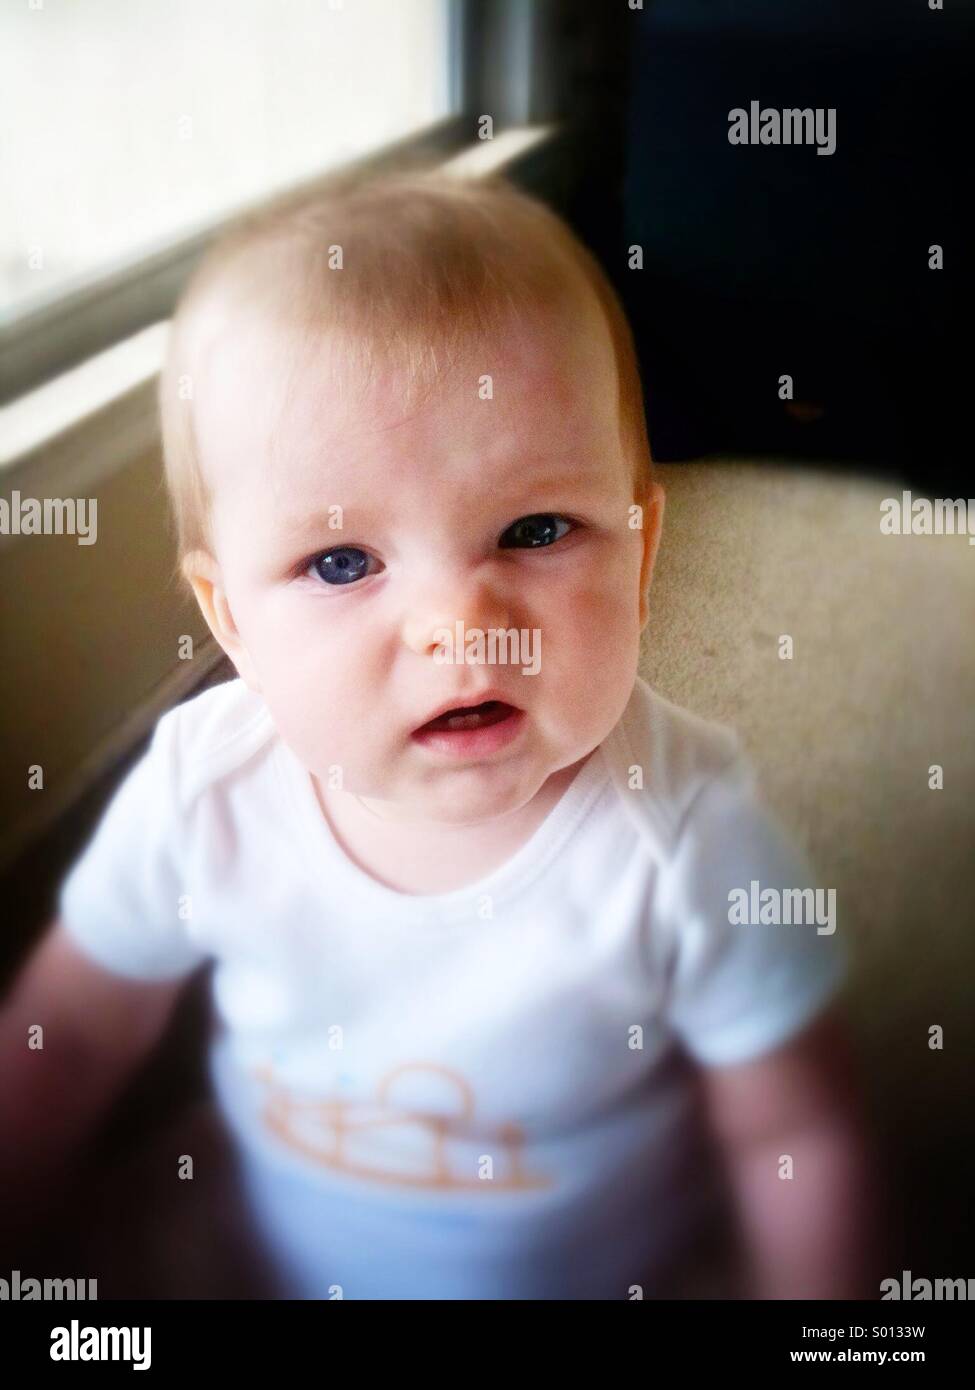 Baby with attitude. Stock Photo